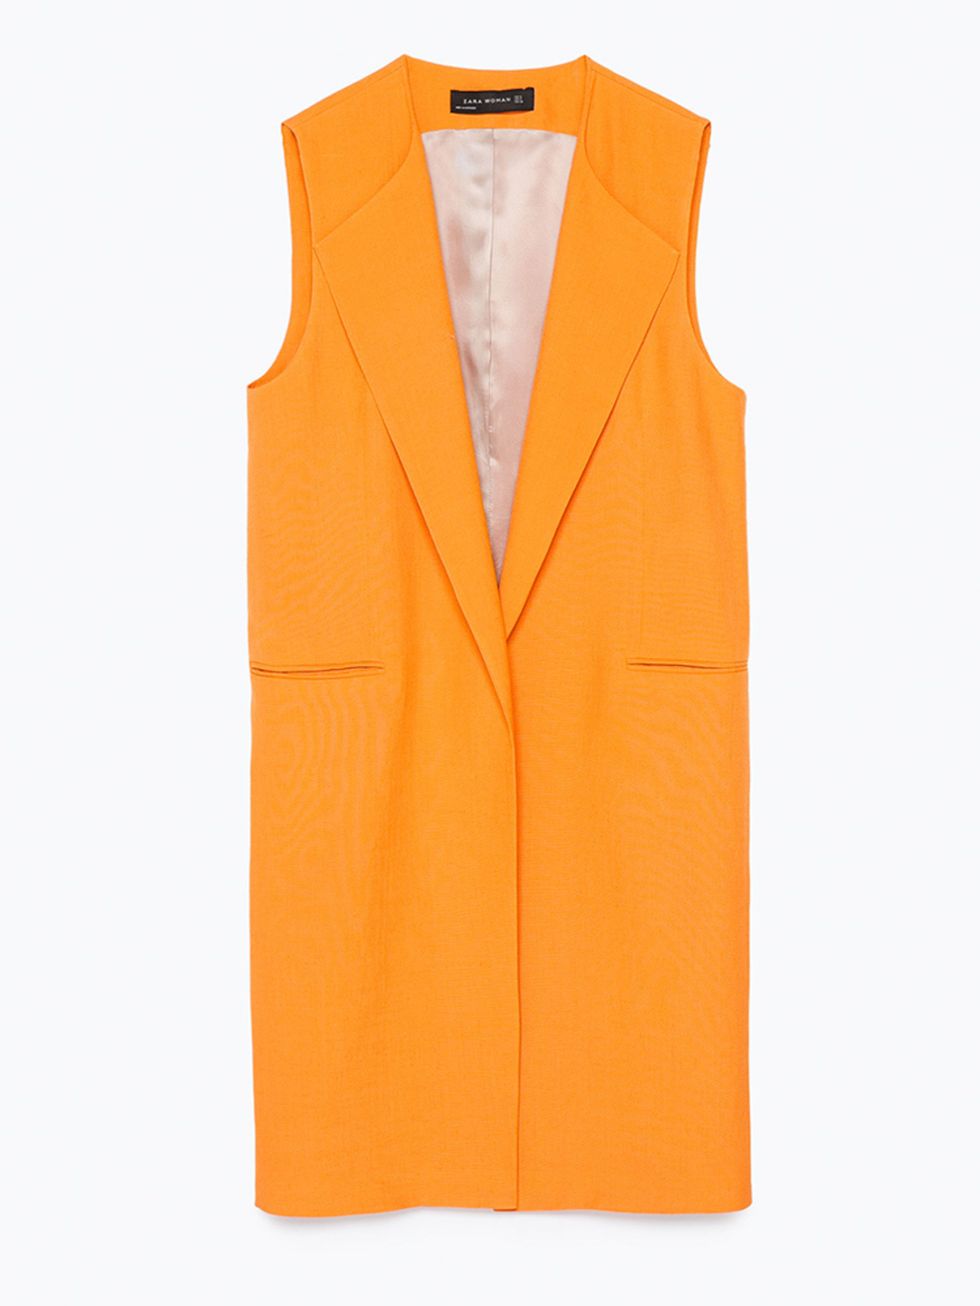 <p><a href="http://www.zara.com/uk/en/woman/jackets/view-all/long-waistcoat-c719017p2649523.html" target="_blank">Zara</a> yellow sleeveless jacket, £69.99</p>